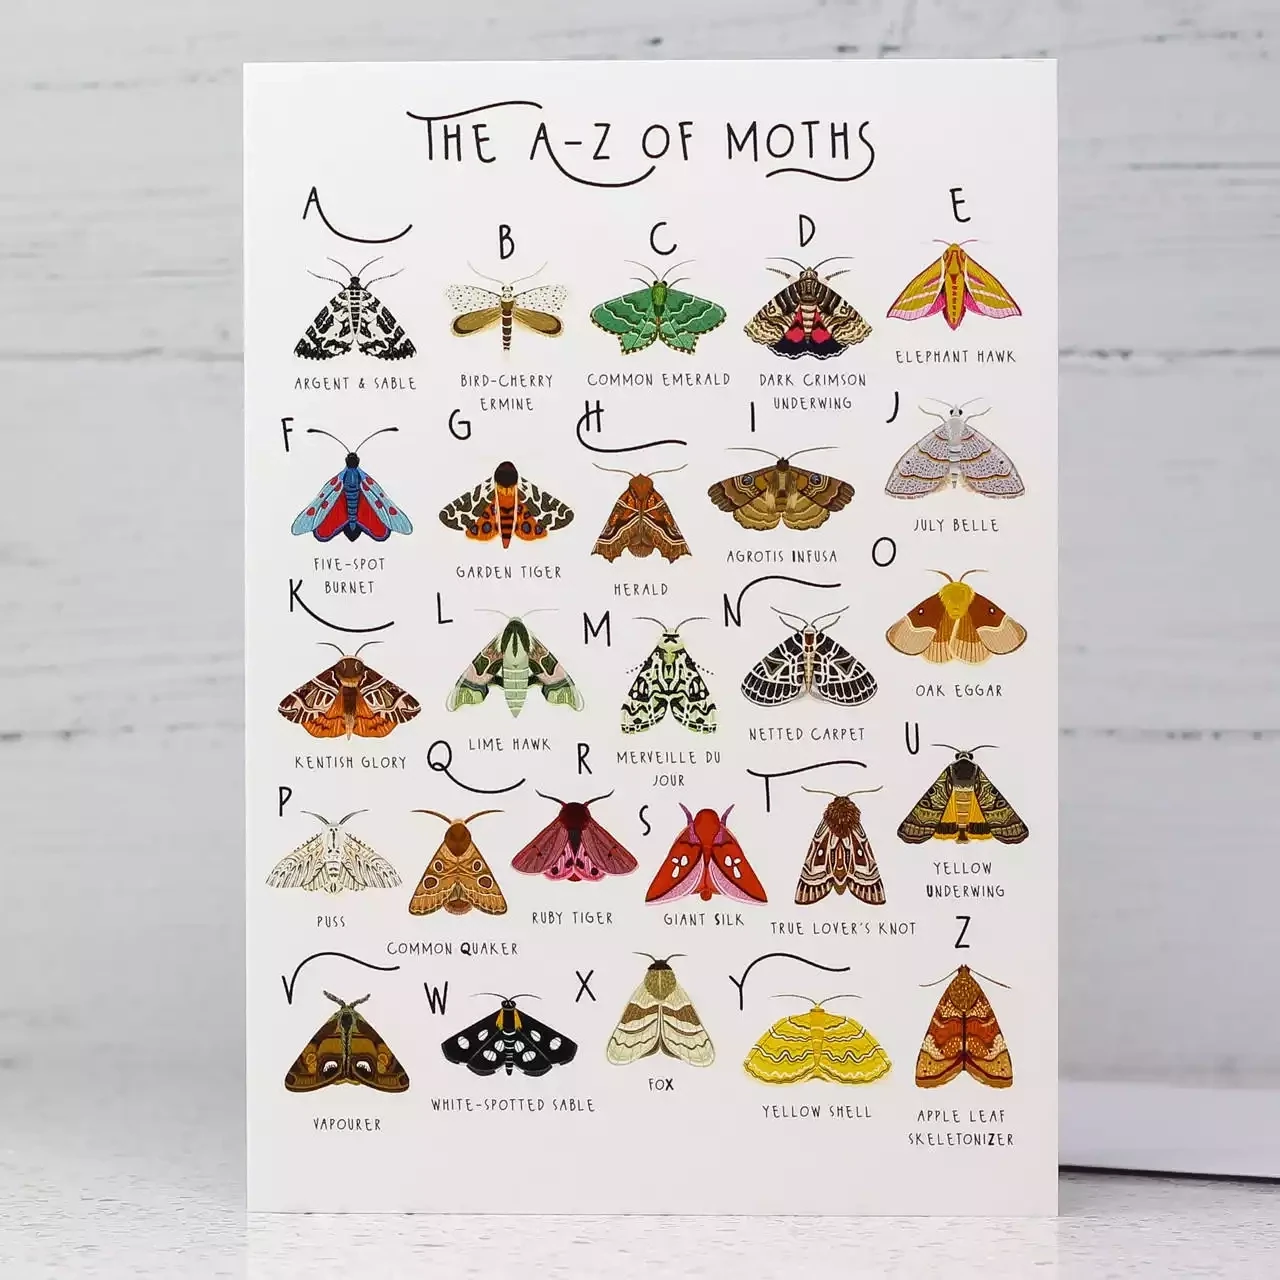 A-z of Moths Card by Bea Baranowska